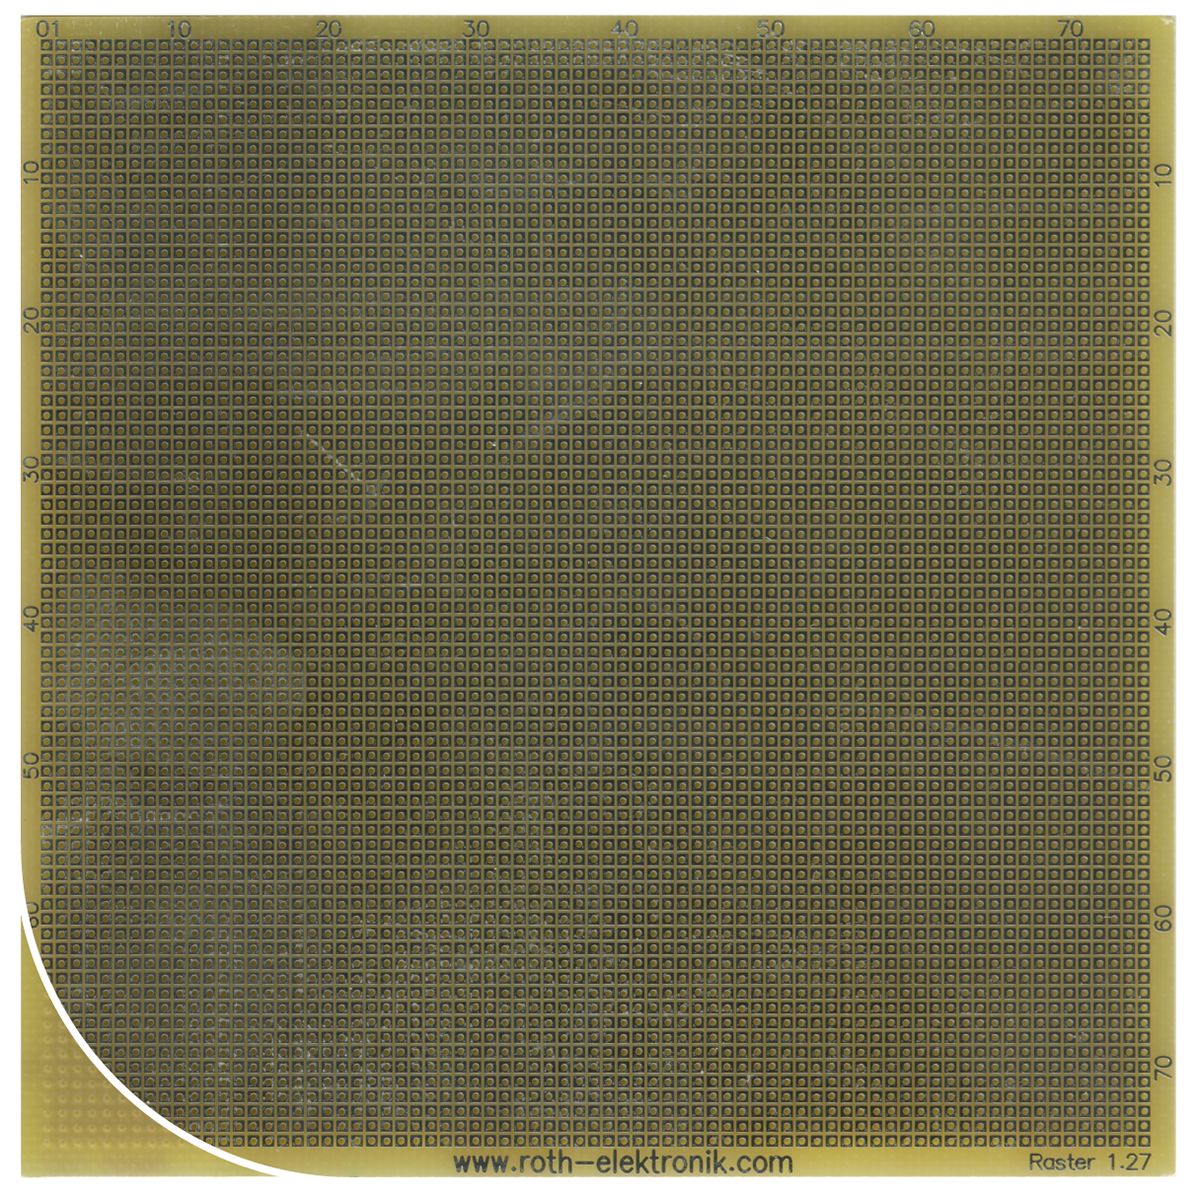 Roth Elektronik Single Sided Matrix Board FR4 With 75 x 75 0.45mm Holes, 1.27 x 1.27mm Pitch, 99.69 x 99.06 x 1.5mm